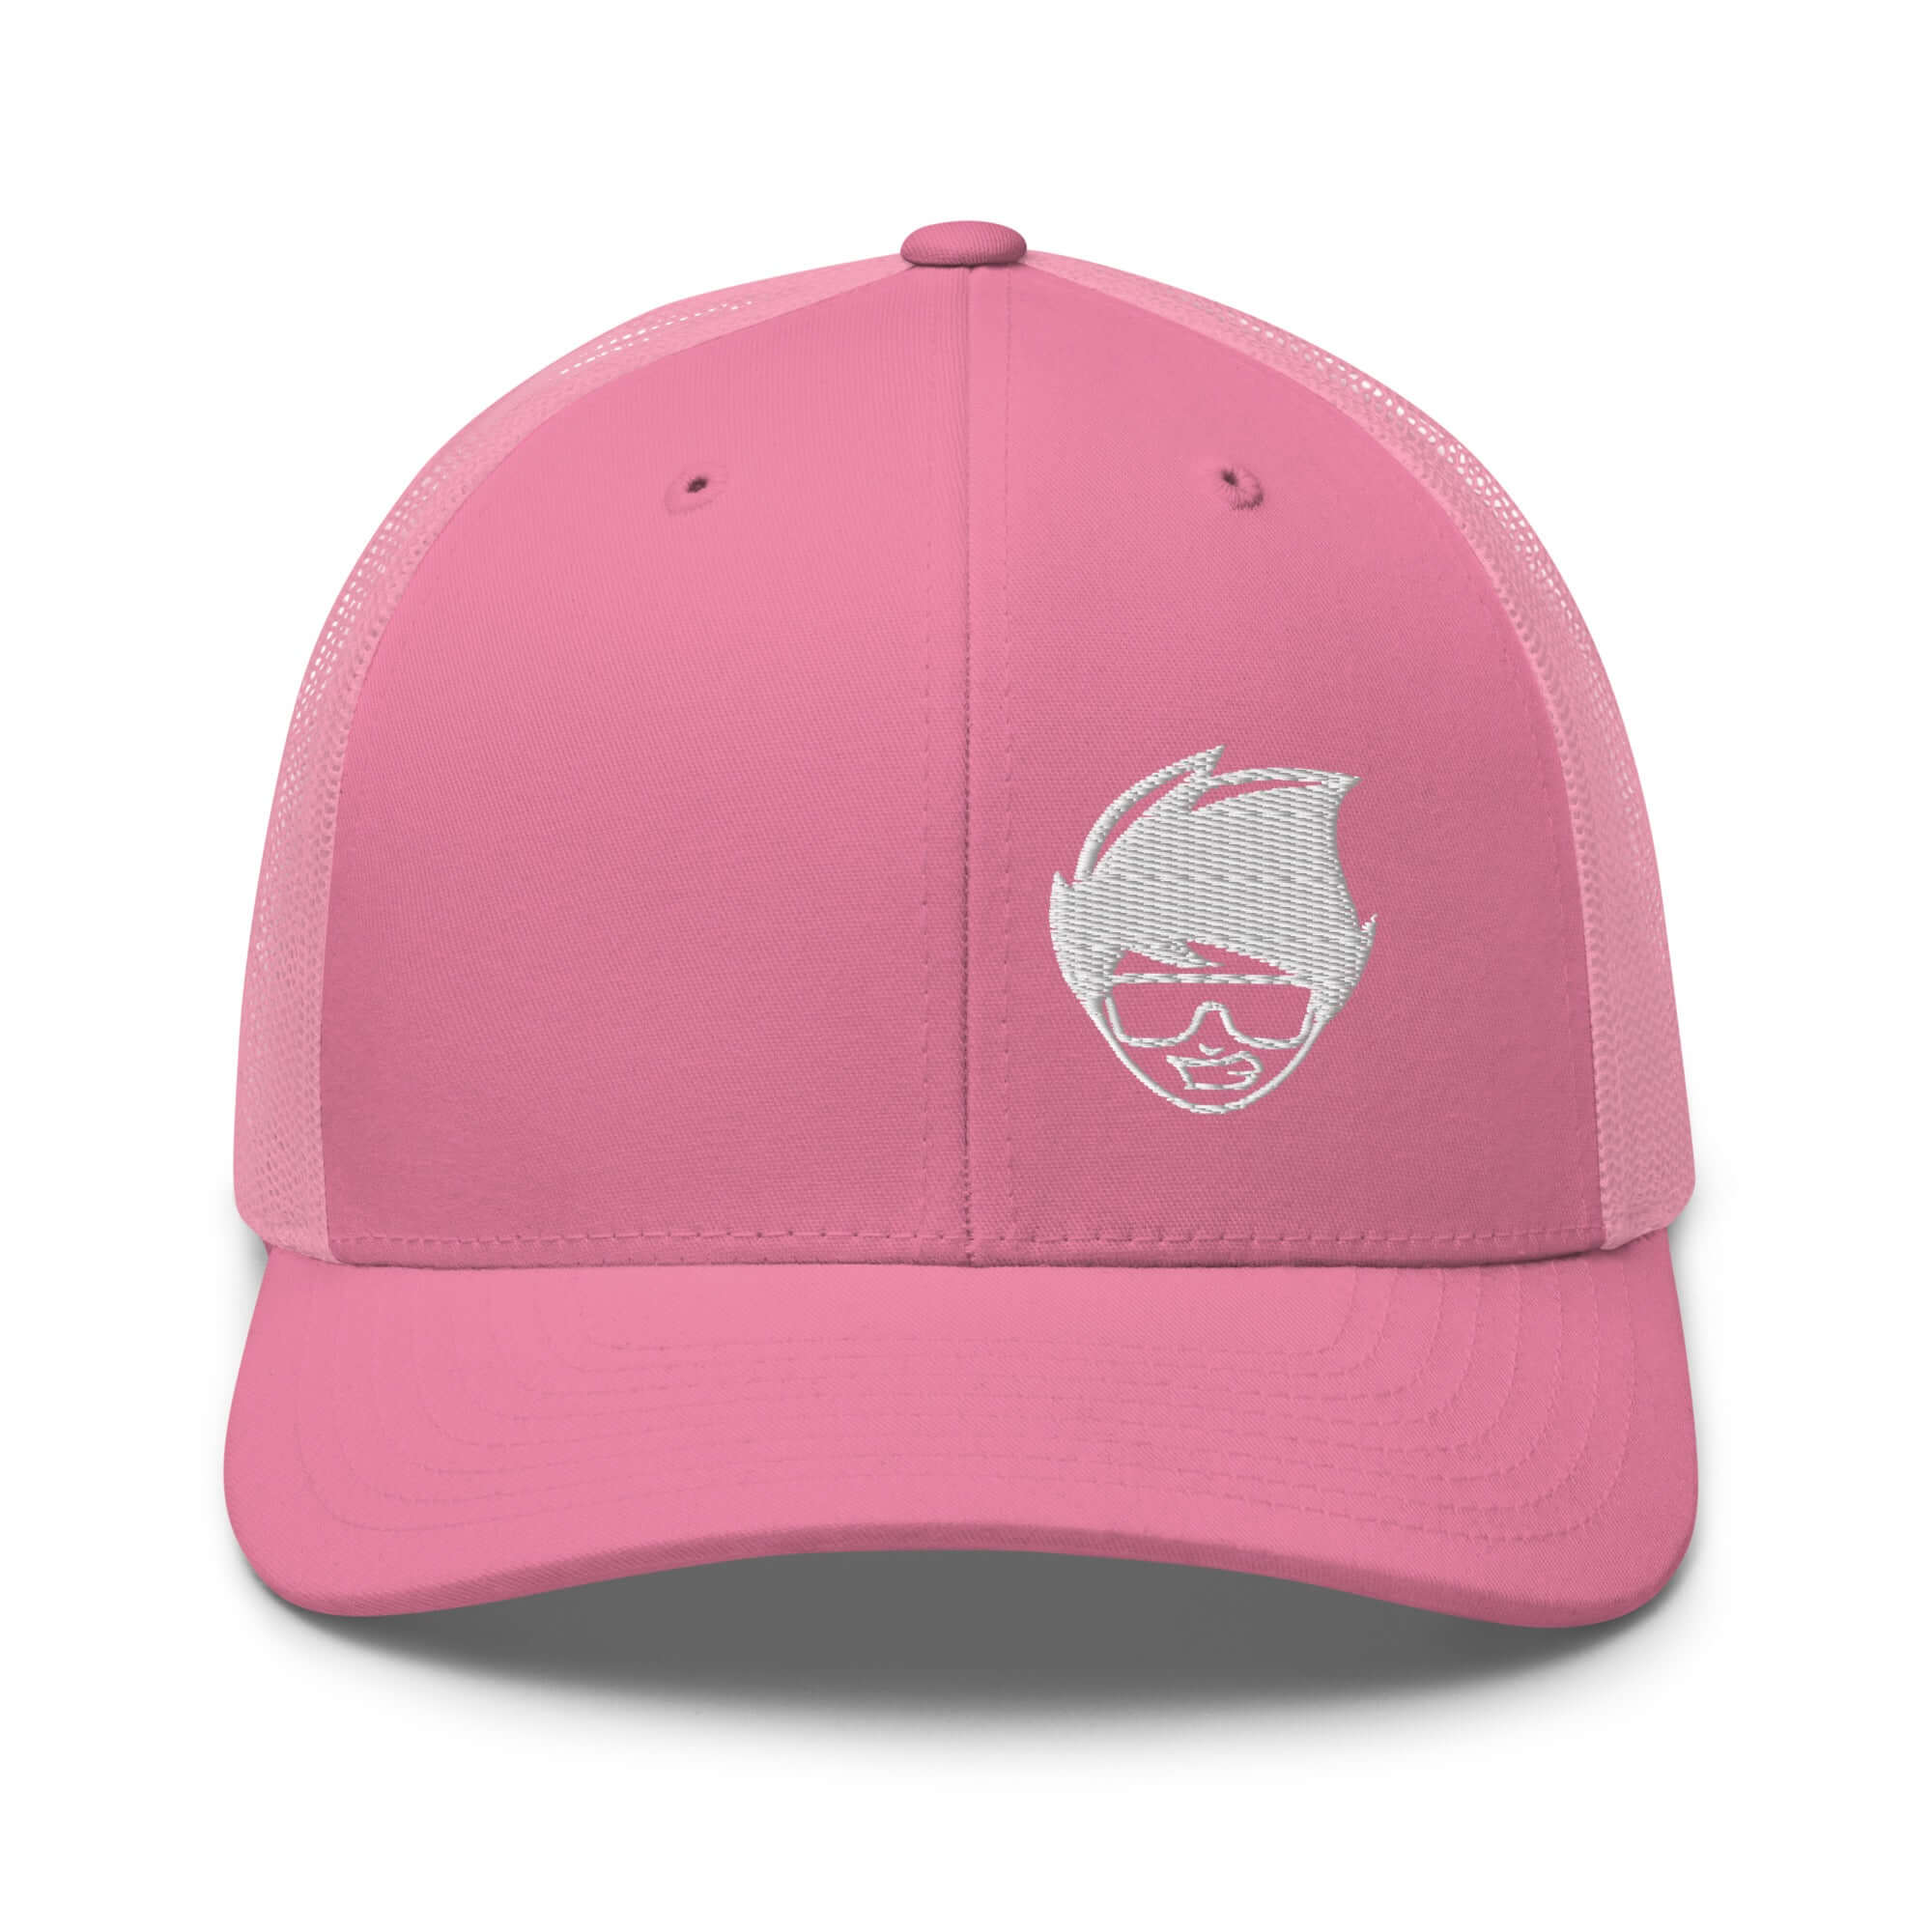 Women's Fishing Hats - Trucker Hats & Caps